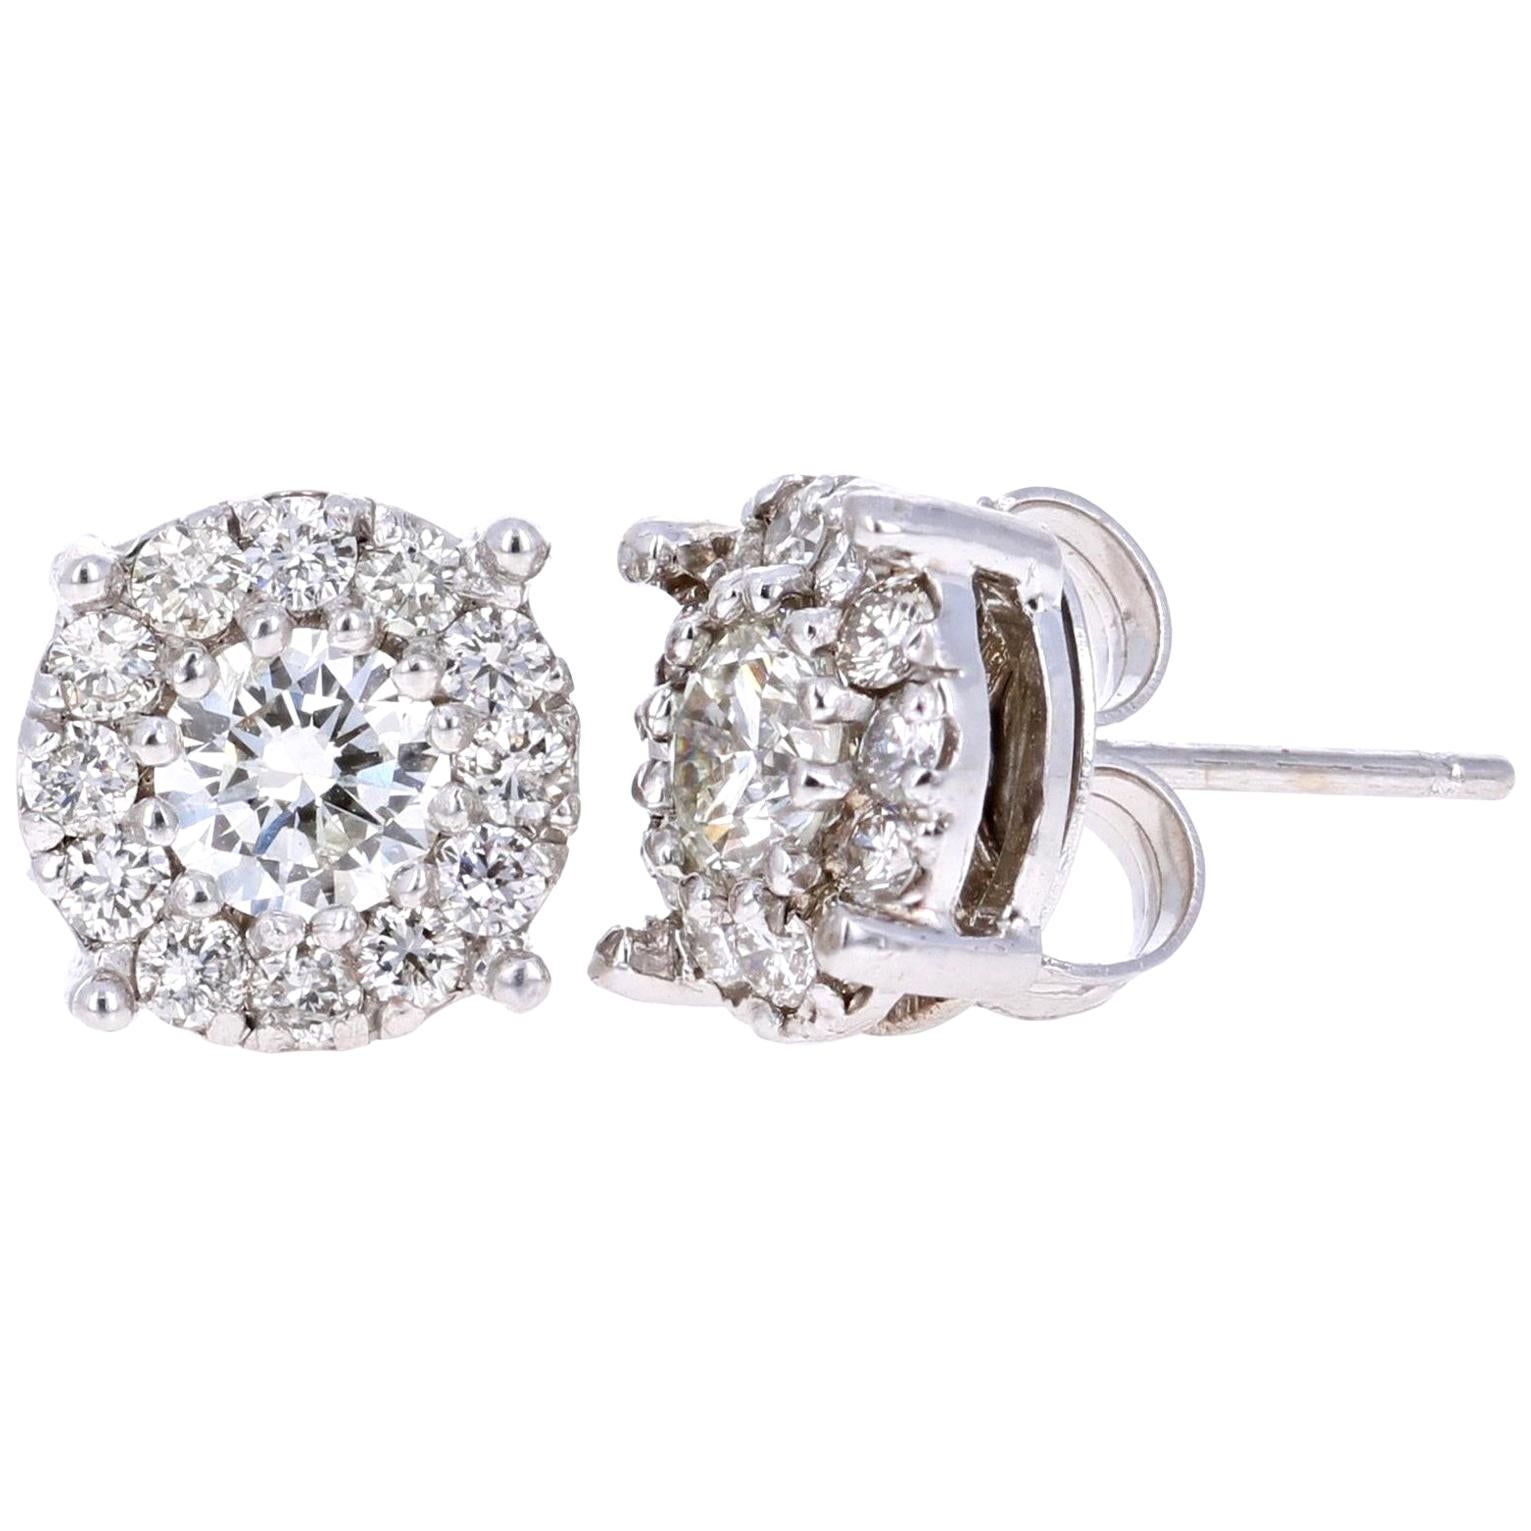 1.38 Carat Round Diamond Floret Design White Gold Stud Earrings